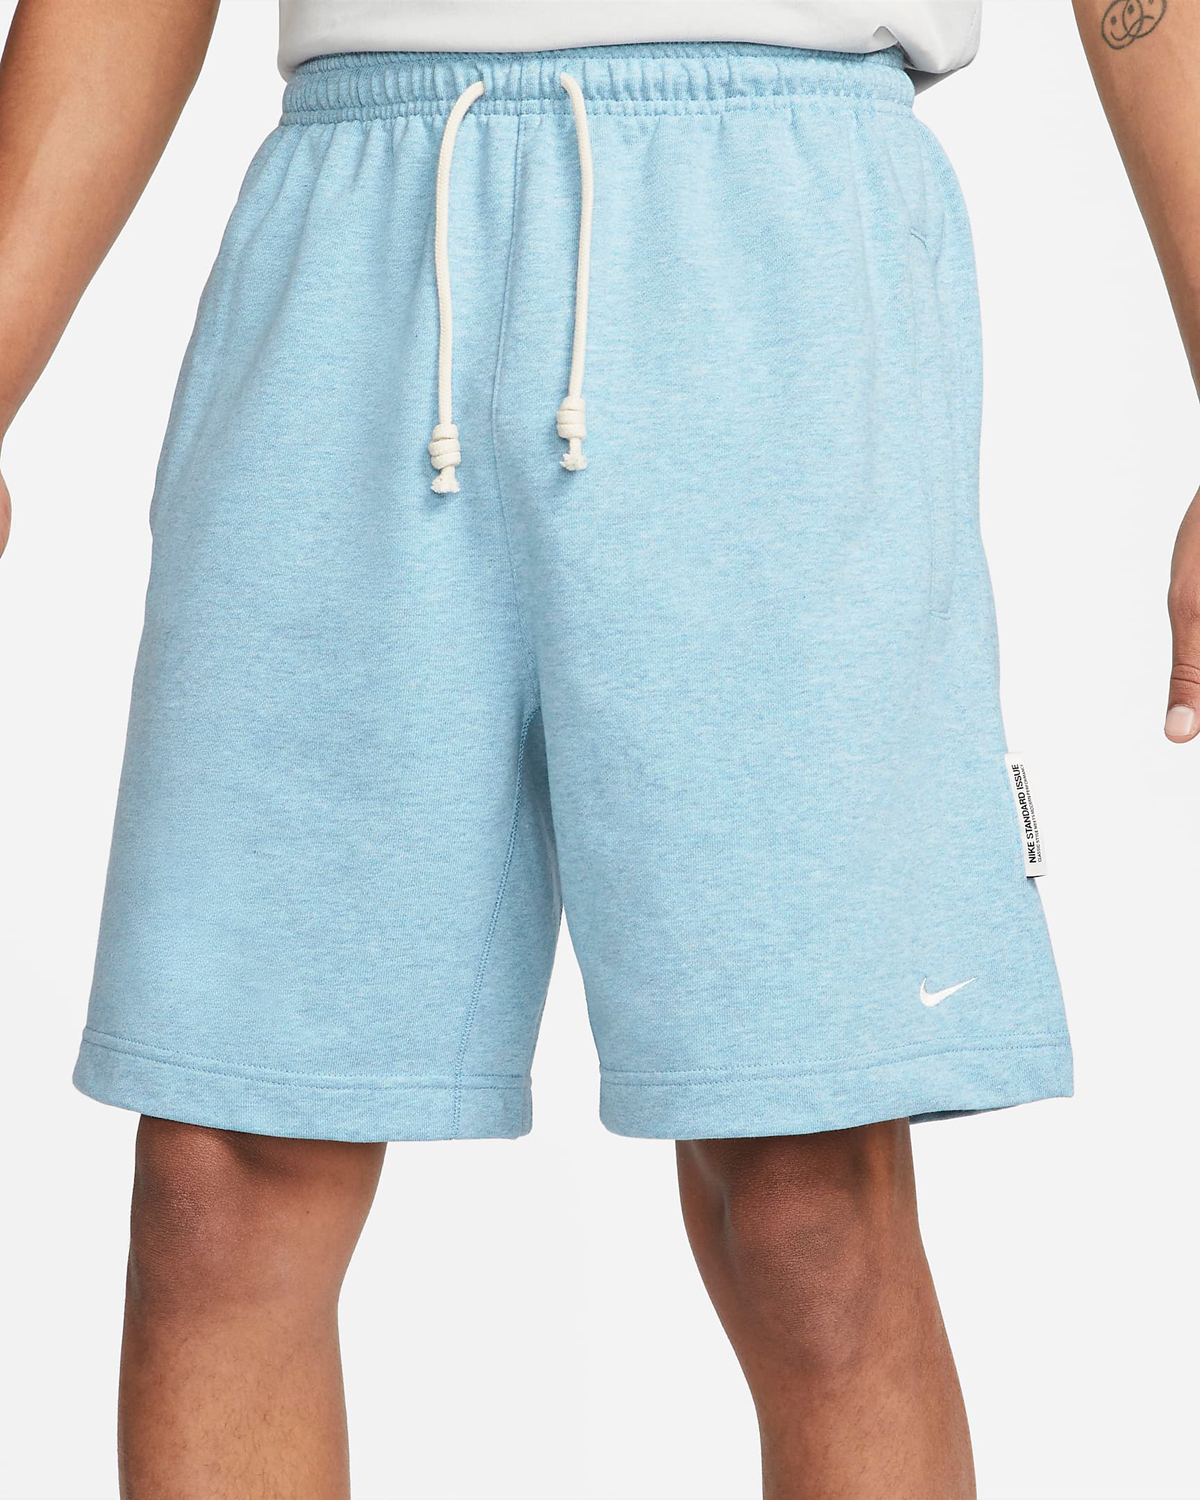 Nike-Standard-Issue-Shorts-Worn-Blue